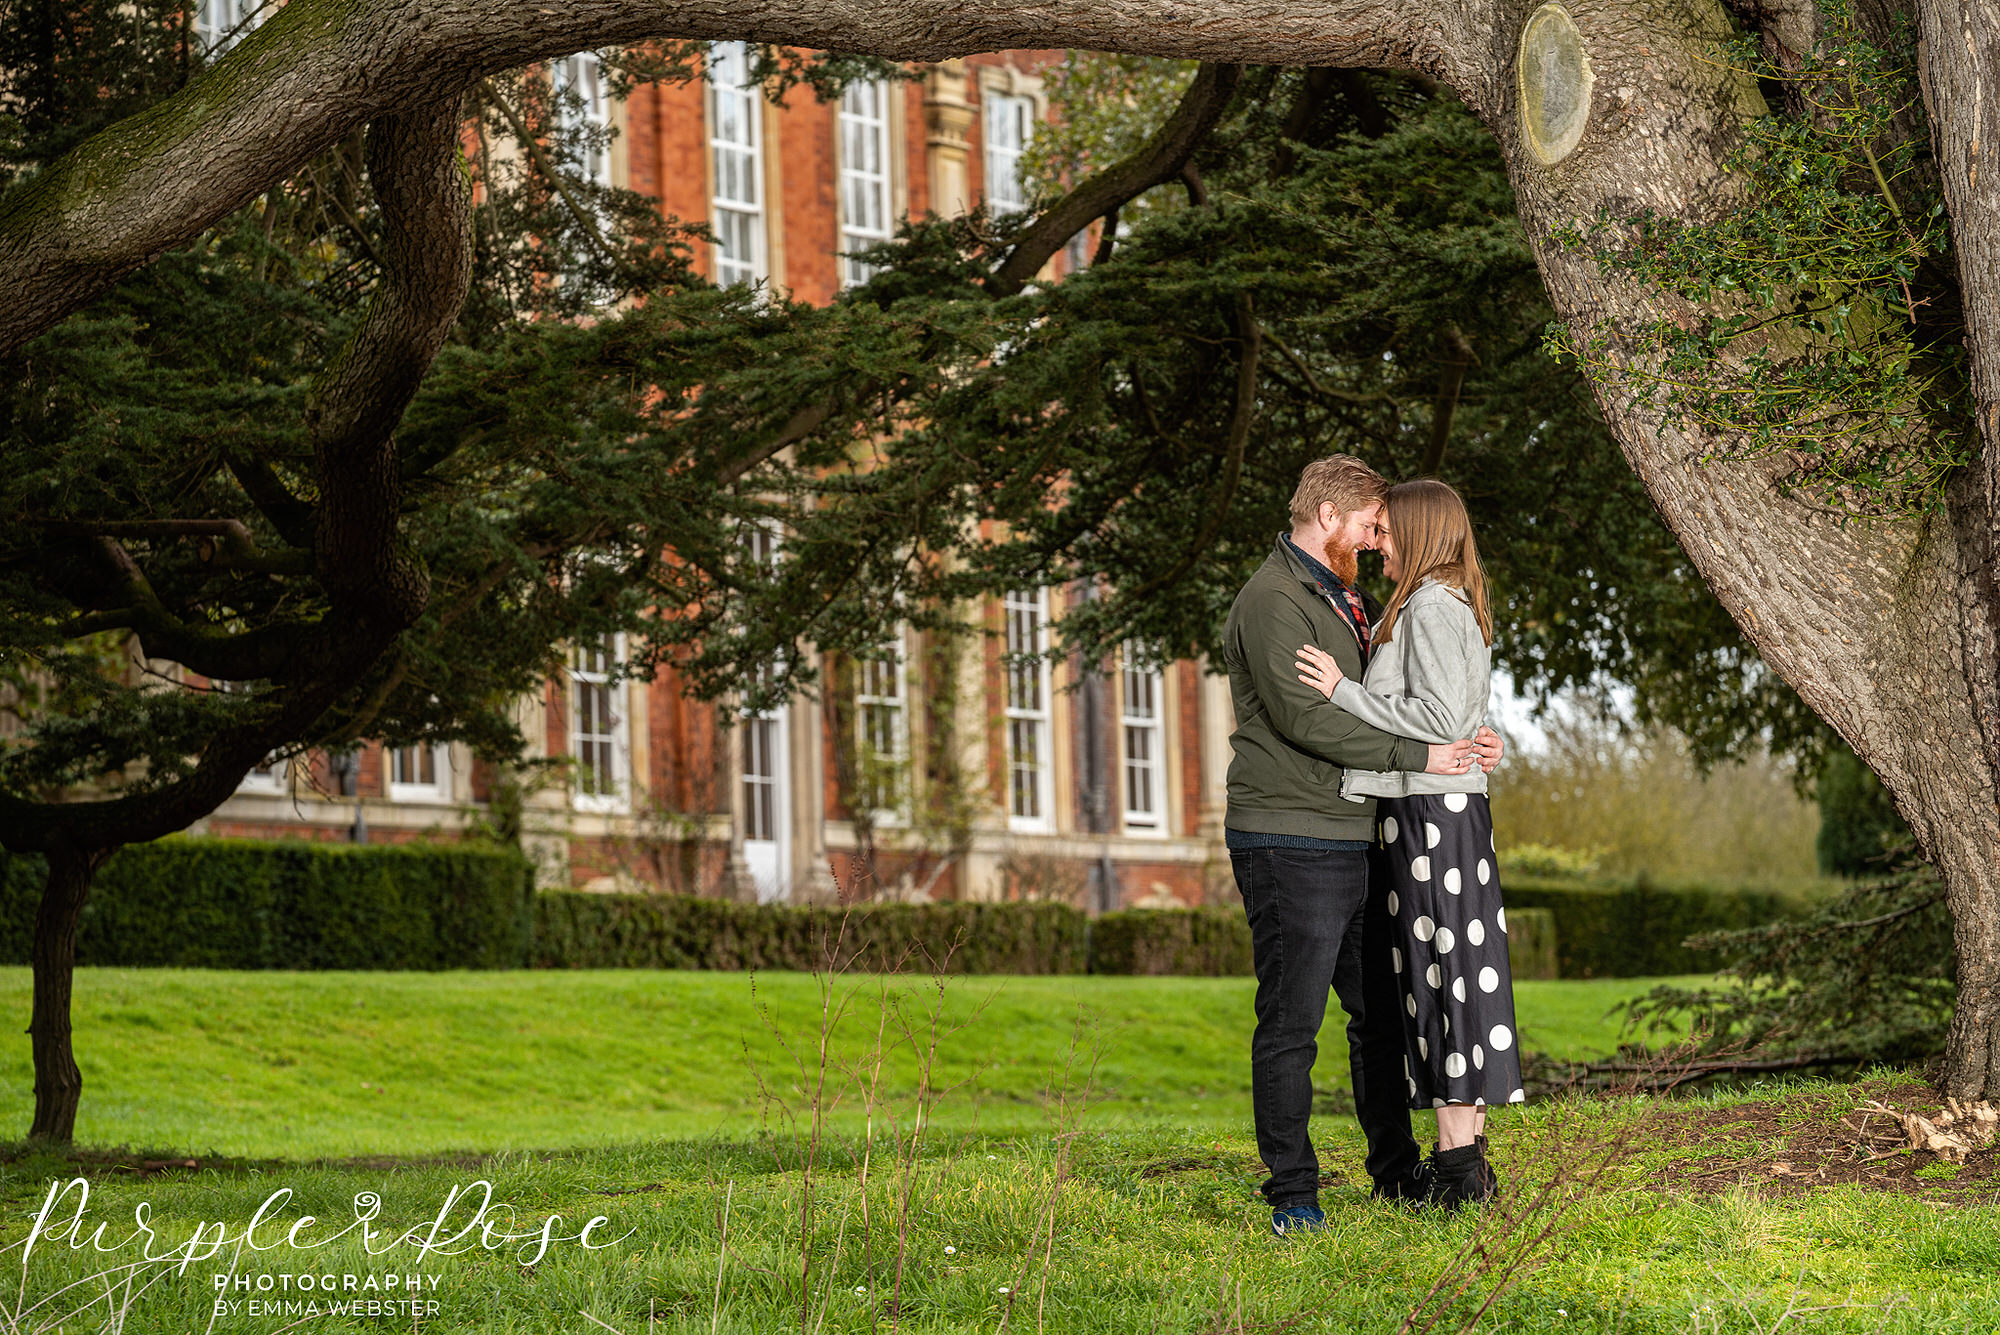 Natasha & Stefan’s Pre-wedding engagement photoshoot at Chicheley Hall